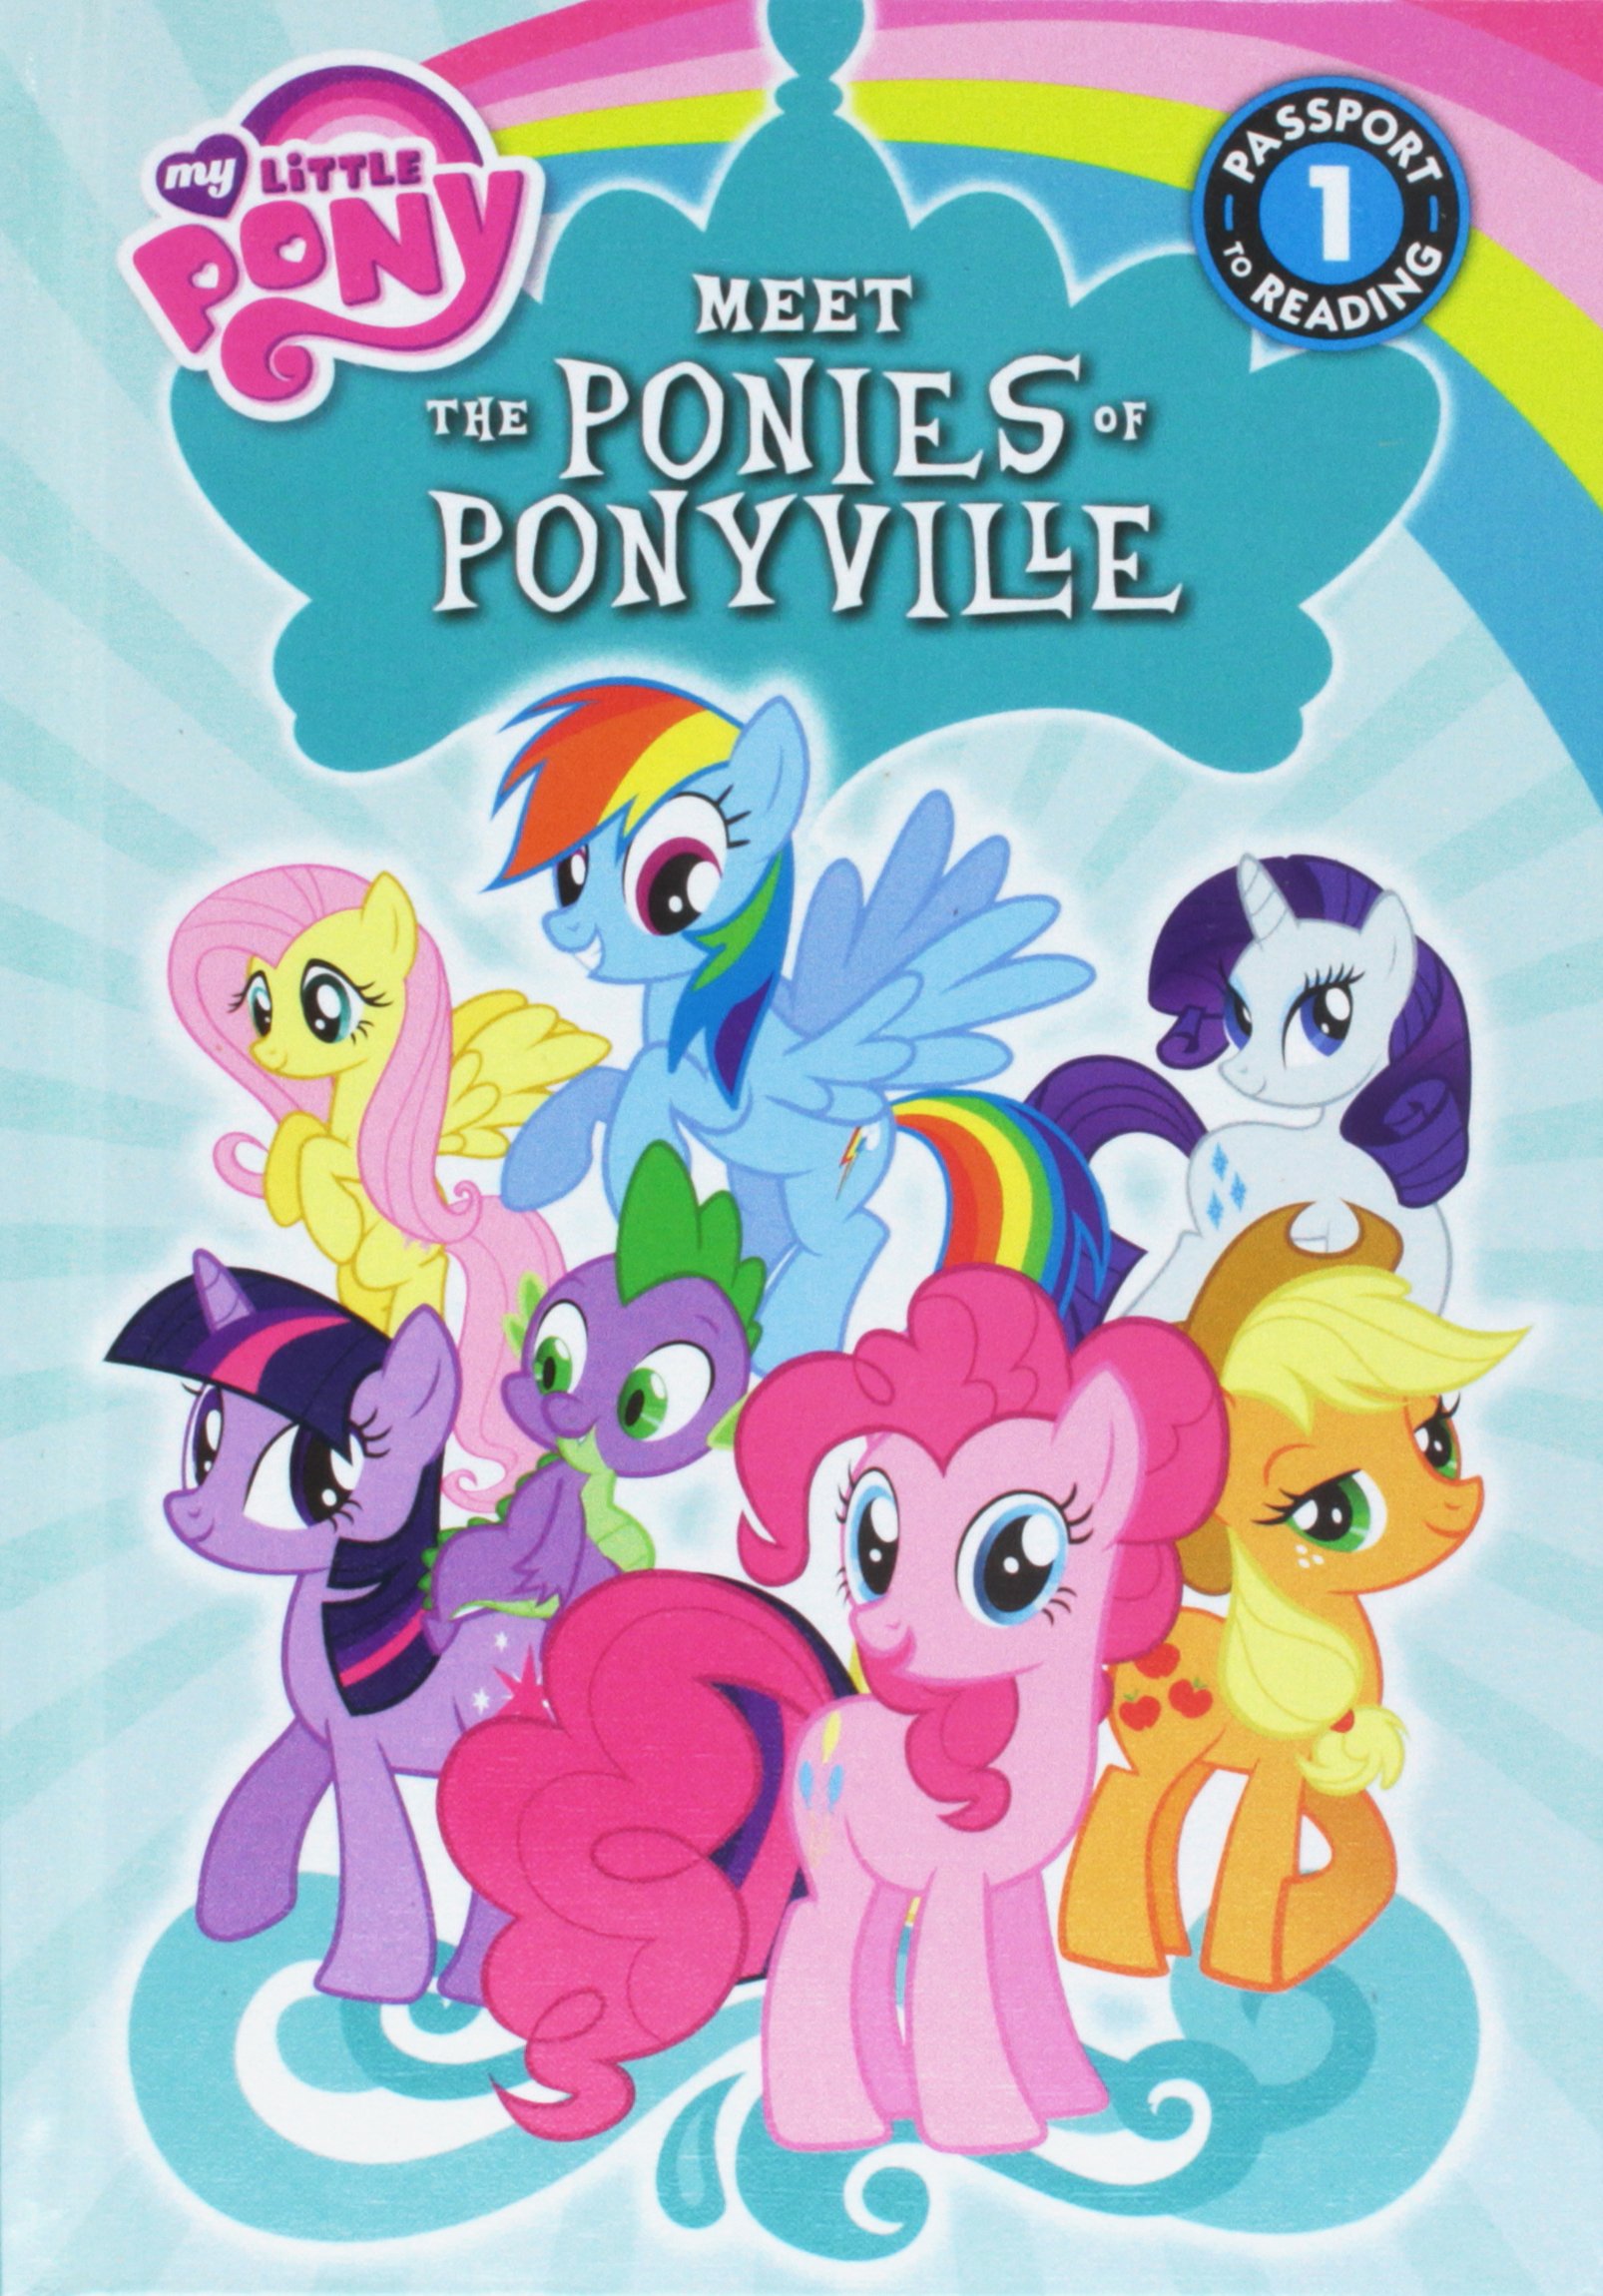 Meet the Ponies of Ponyville (Passport to Reading, Level 1: My Little Pony): London, Olivia: 9781532140938: Books: Amazon.com